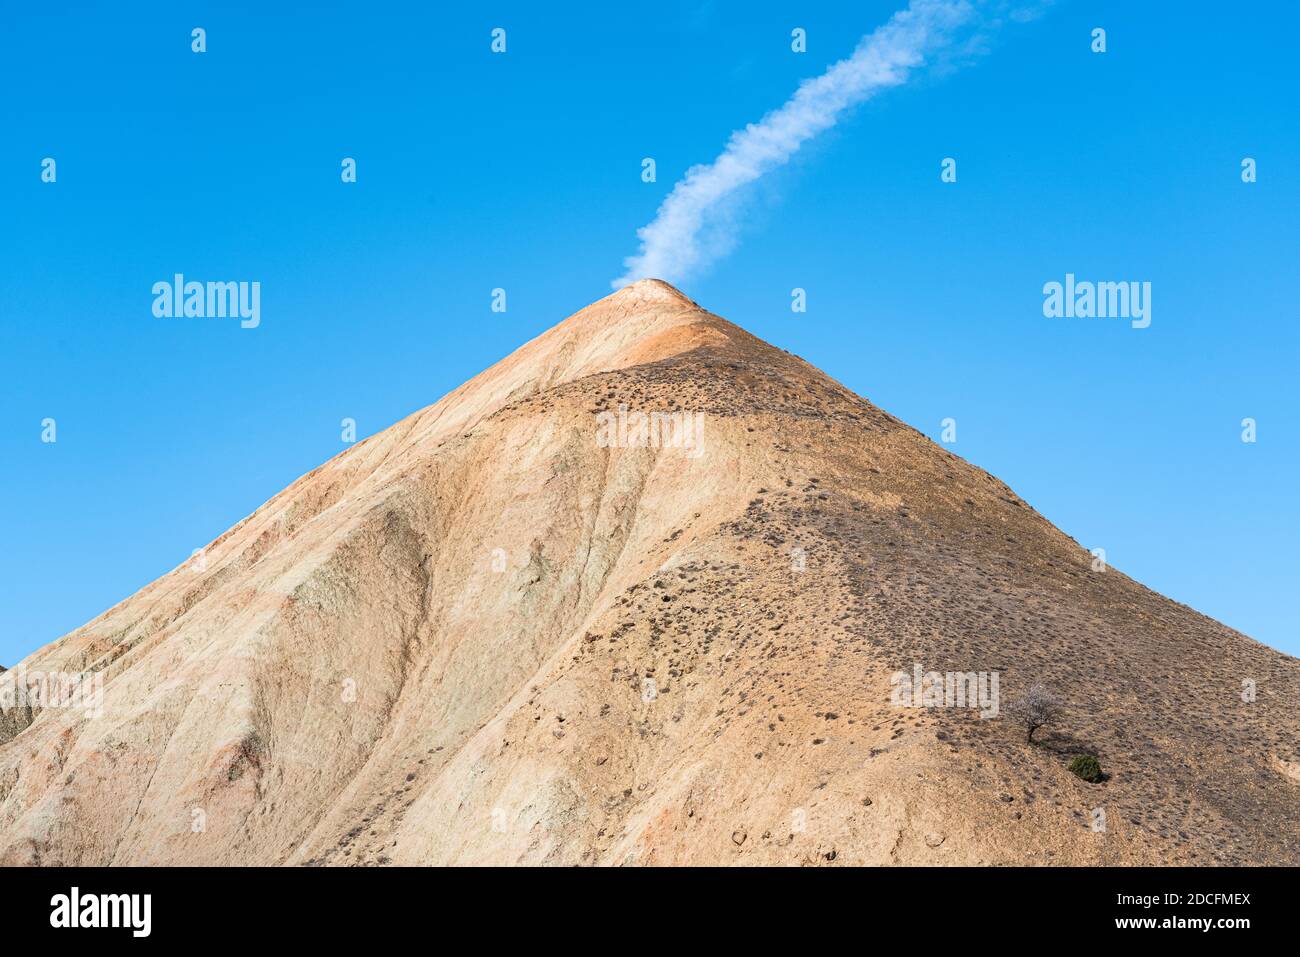 Pyramid shaped mountain peak scenery Stock Photo